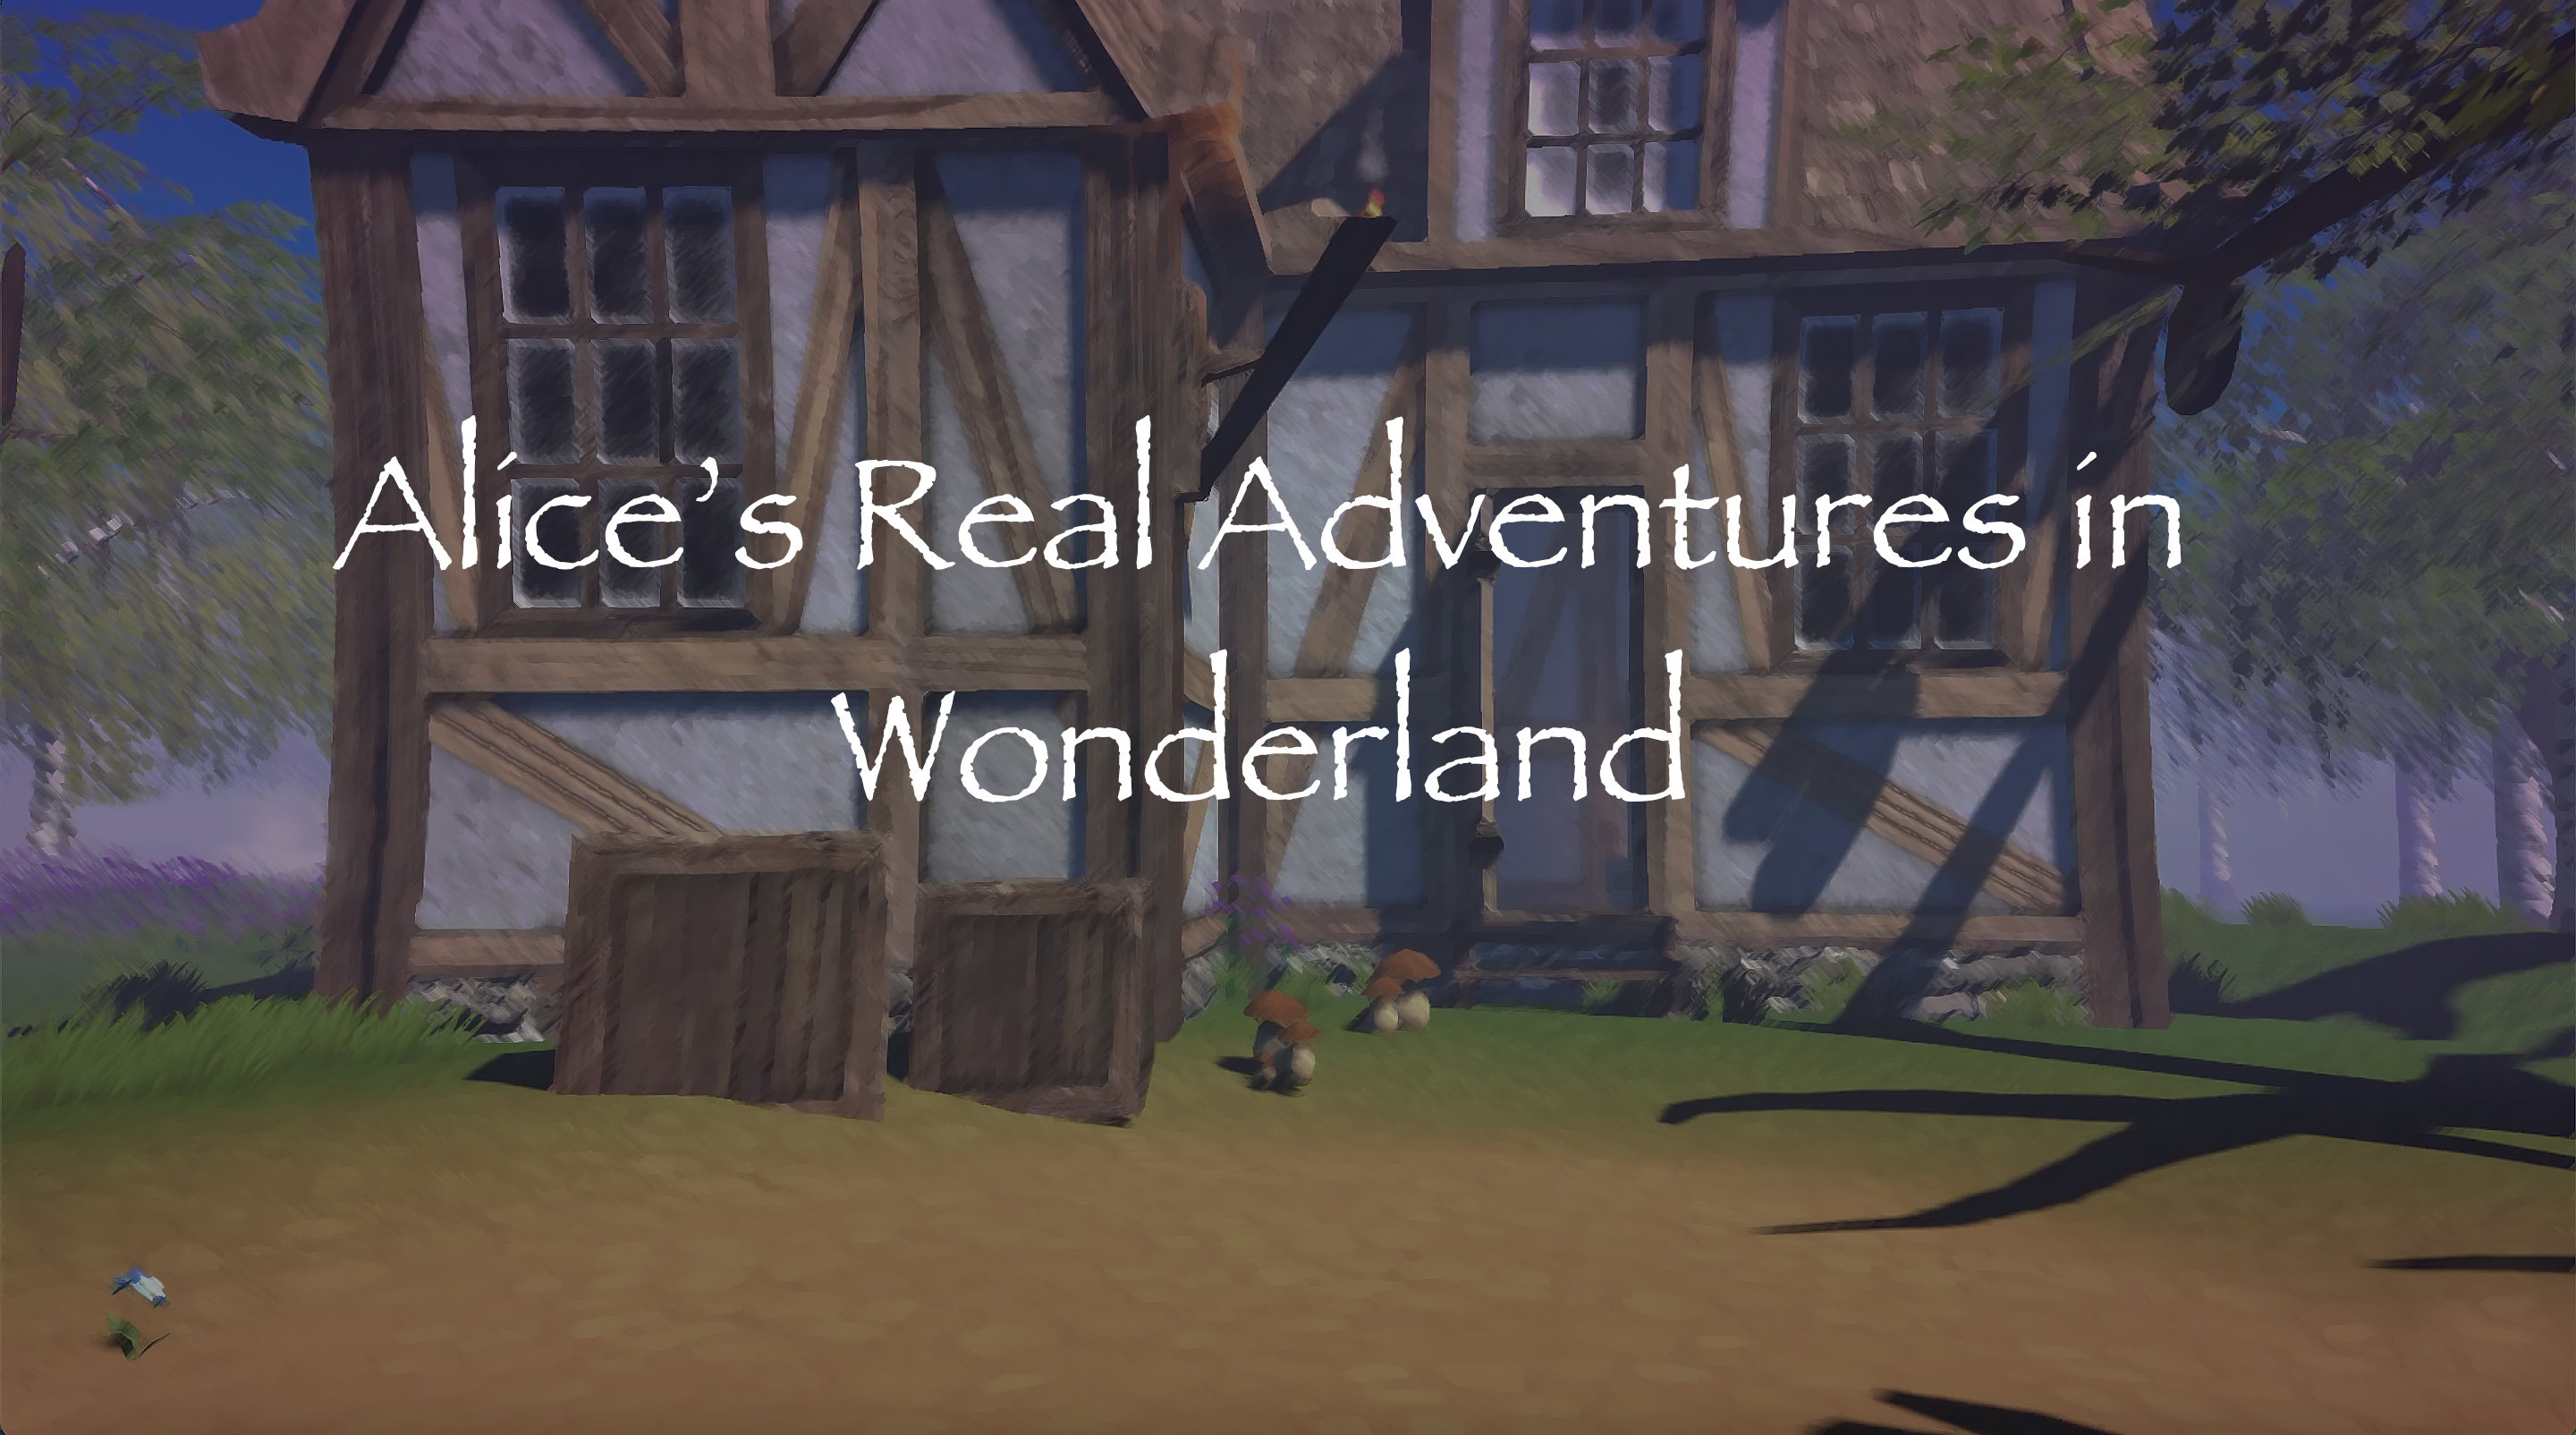 Alice's Real Adventures in Wonderland